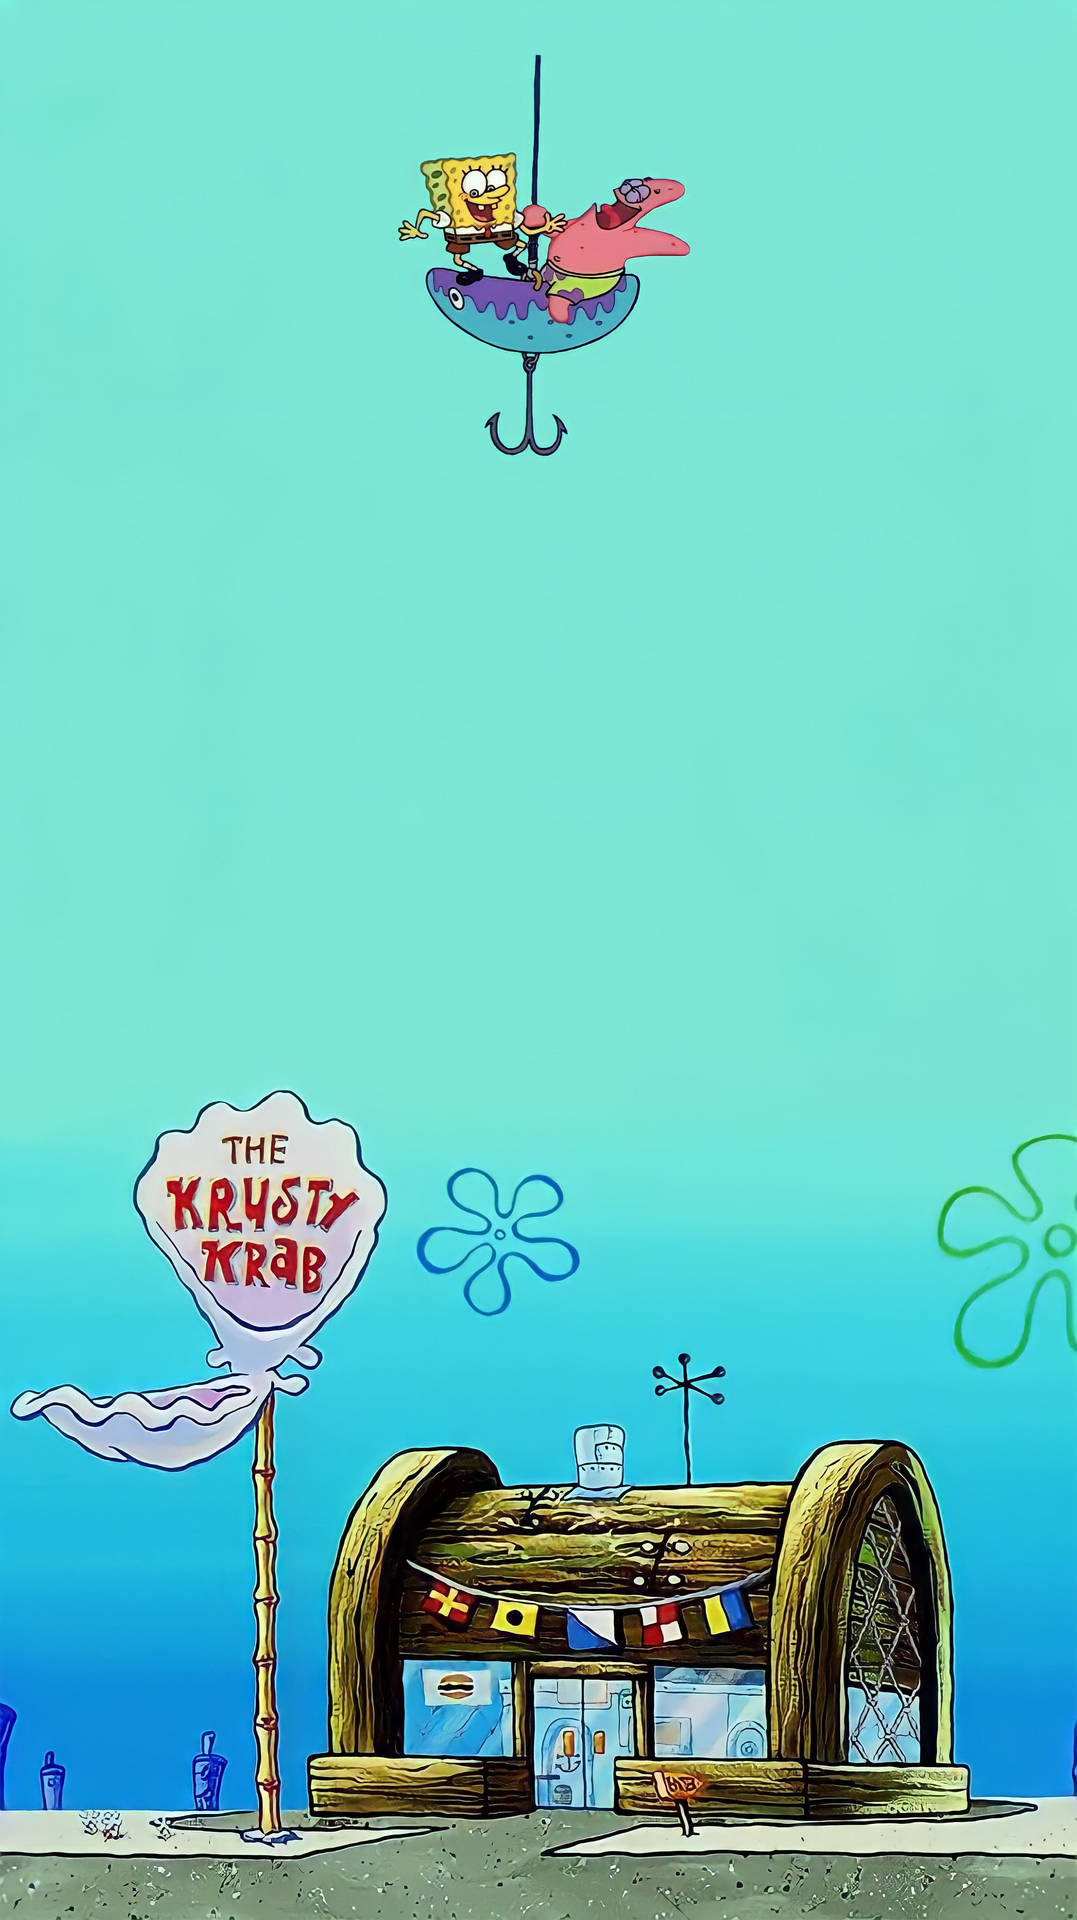 Unique SpongeBob Theme on Redmi Note 9 Punch Hole Display Wallpaper